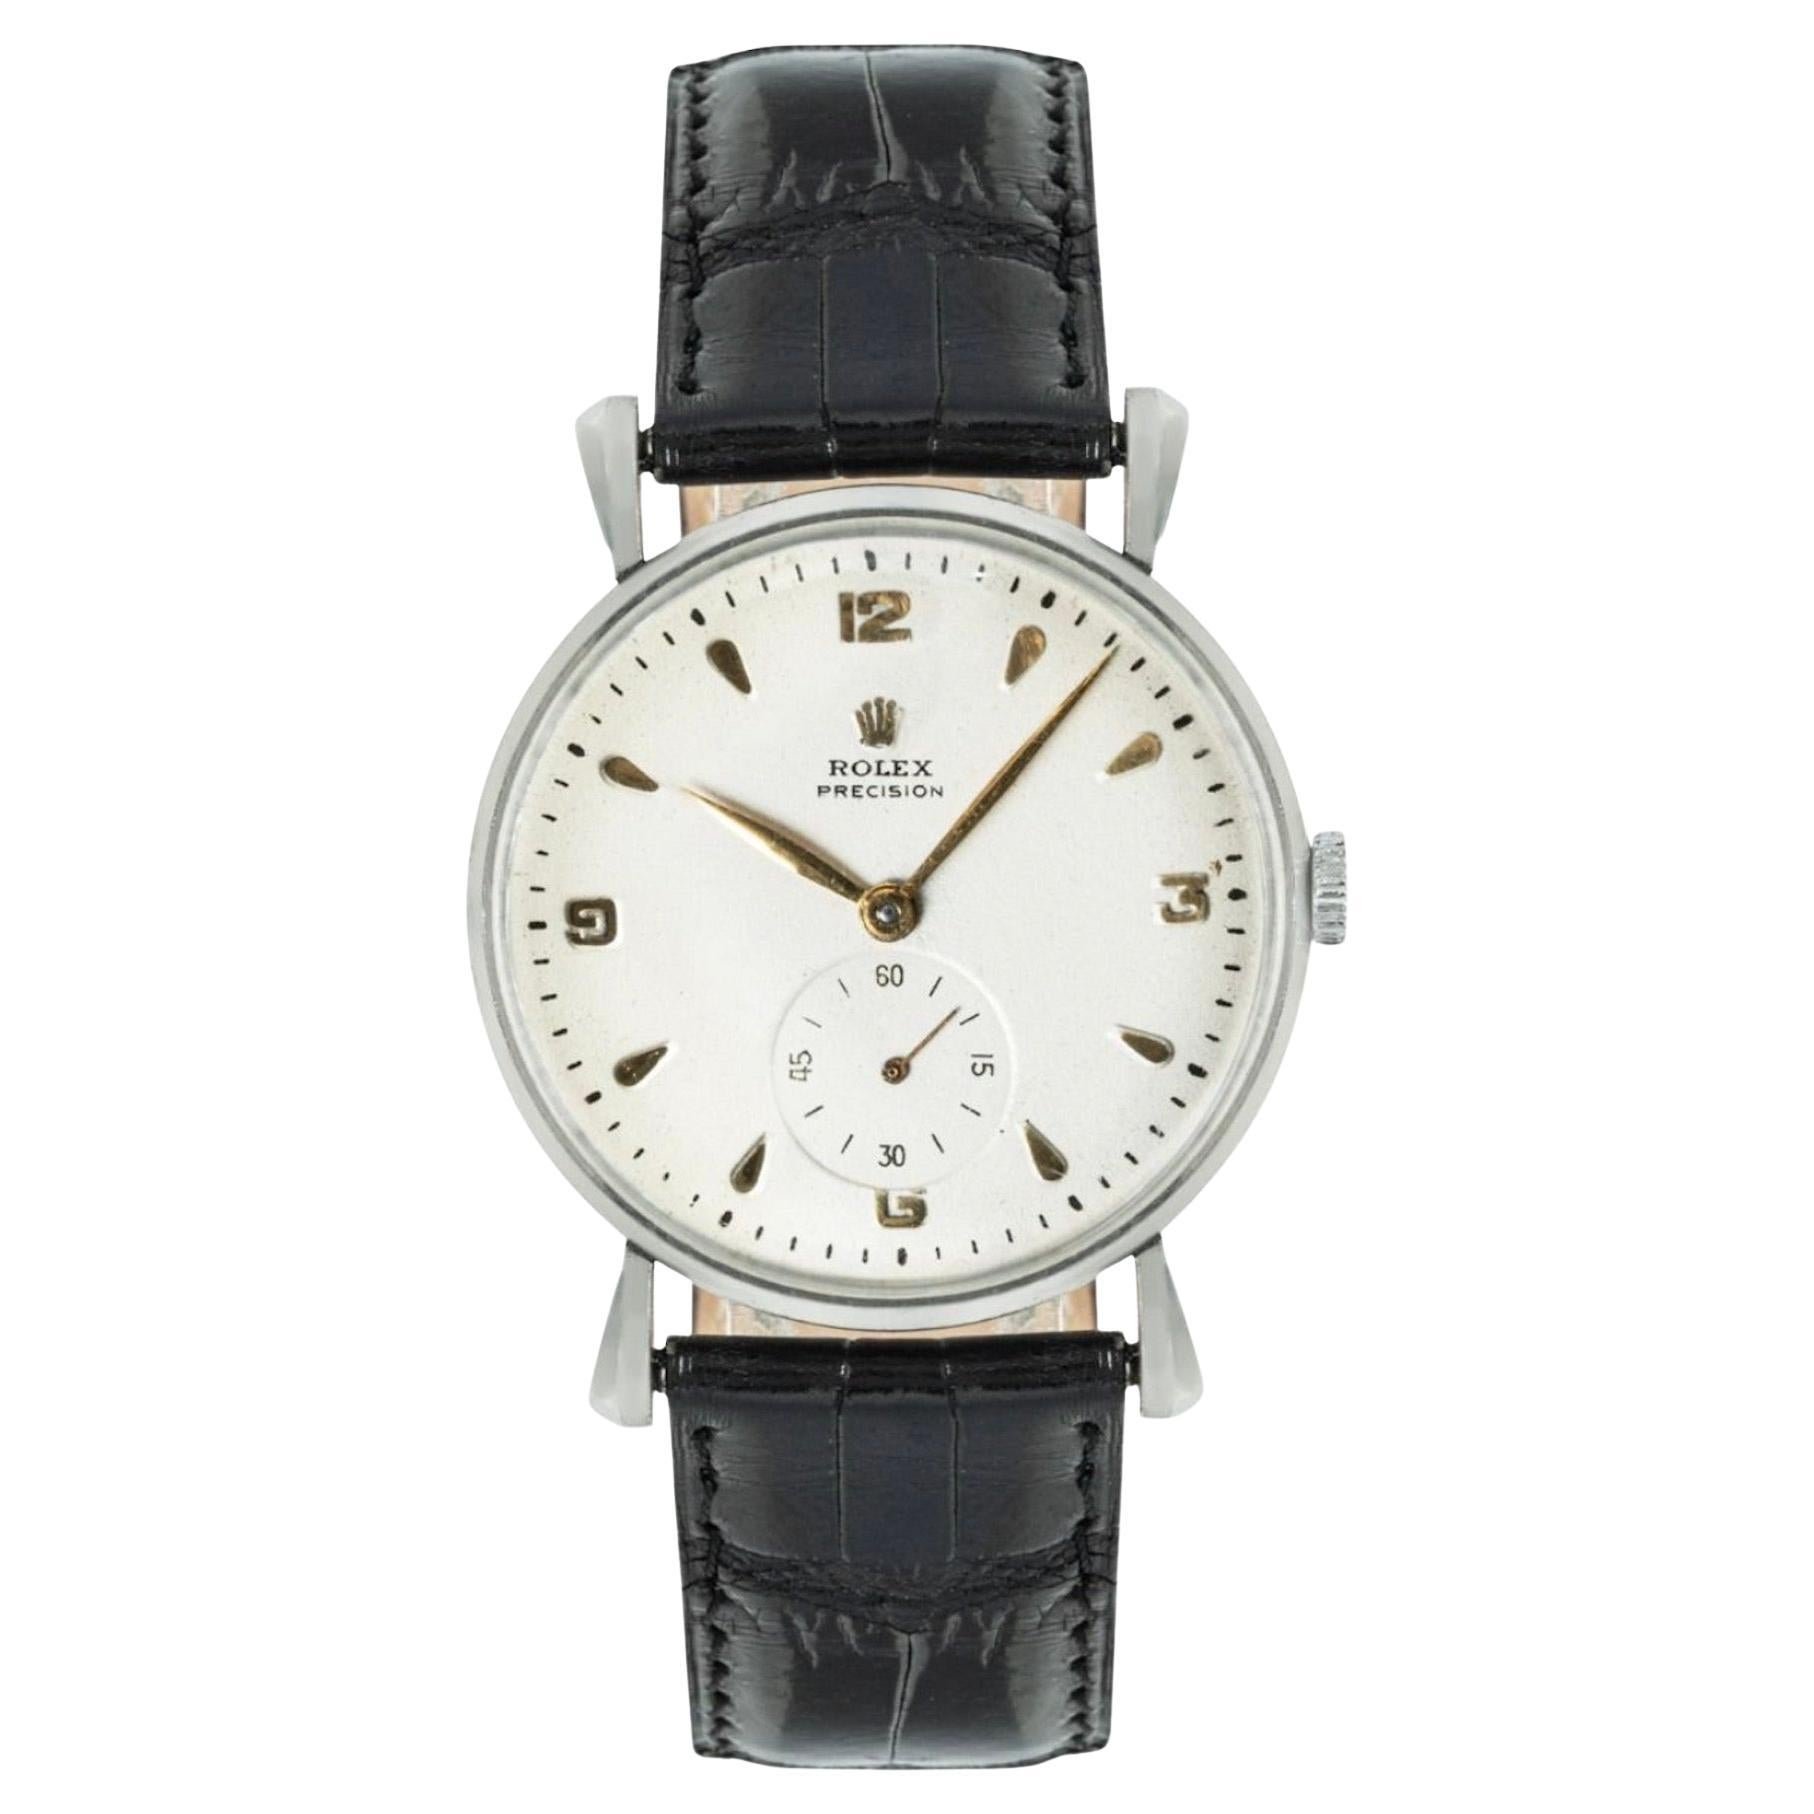 Rolex Precision Watch, Vintage